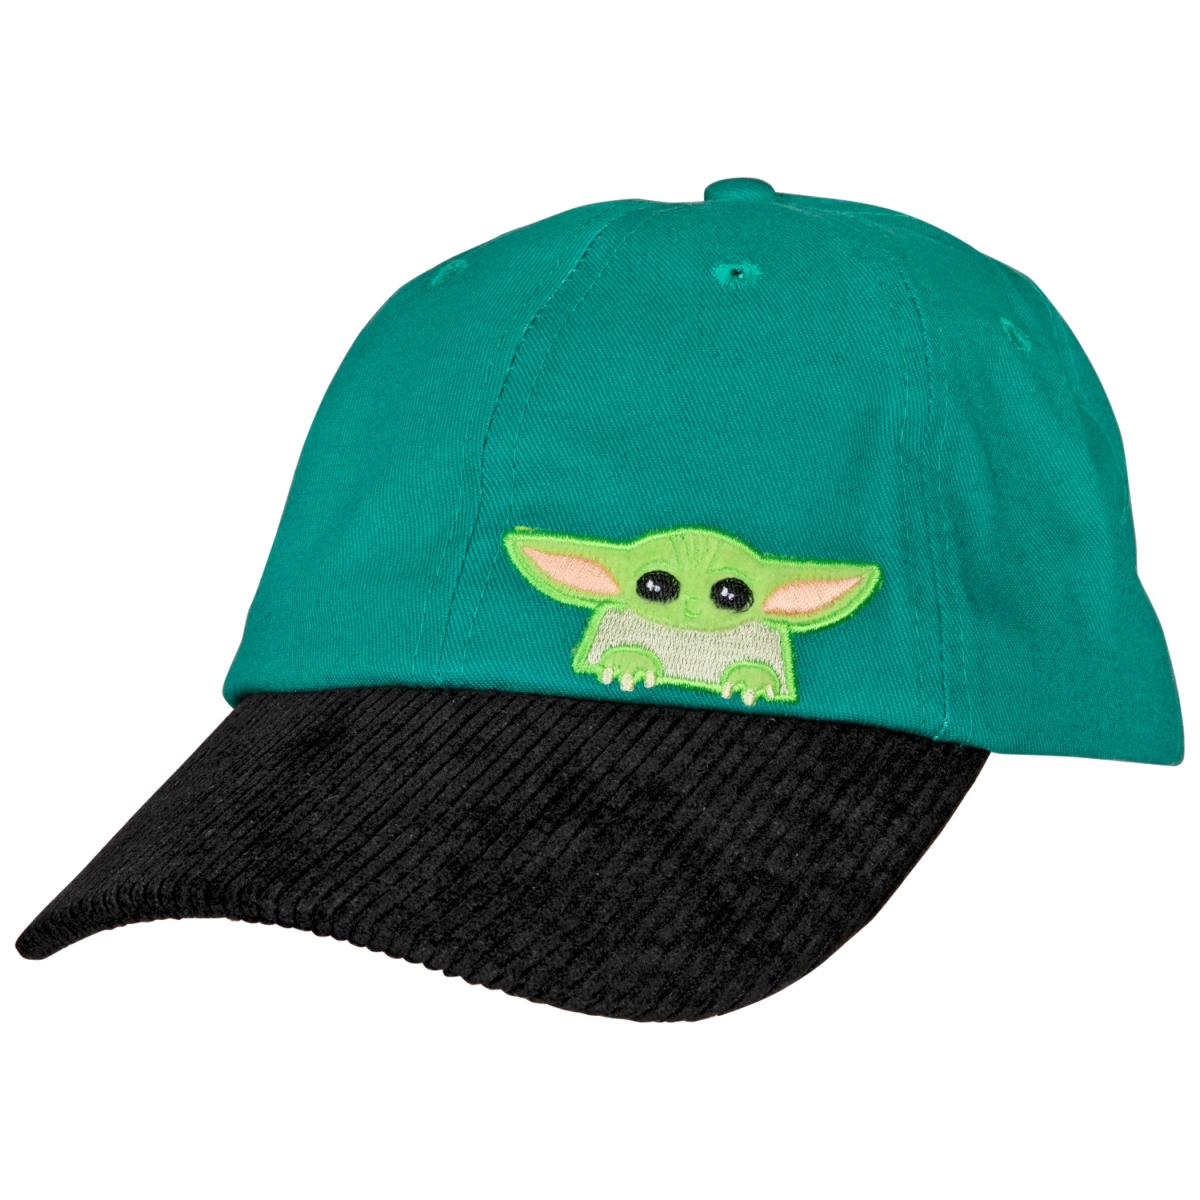 Picture of Star Wars 826057 Star Wars The Child Grogu Peeking Adjustable Snapback Dad Hat